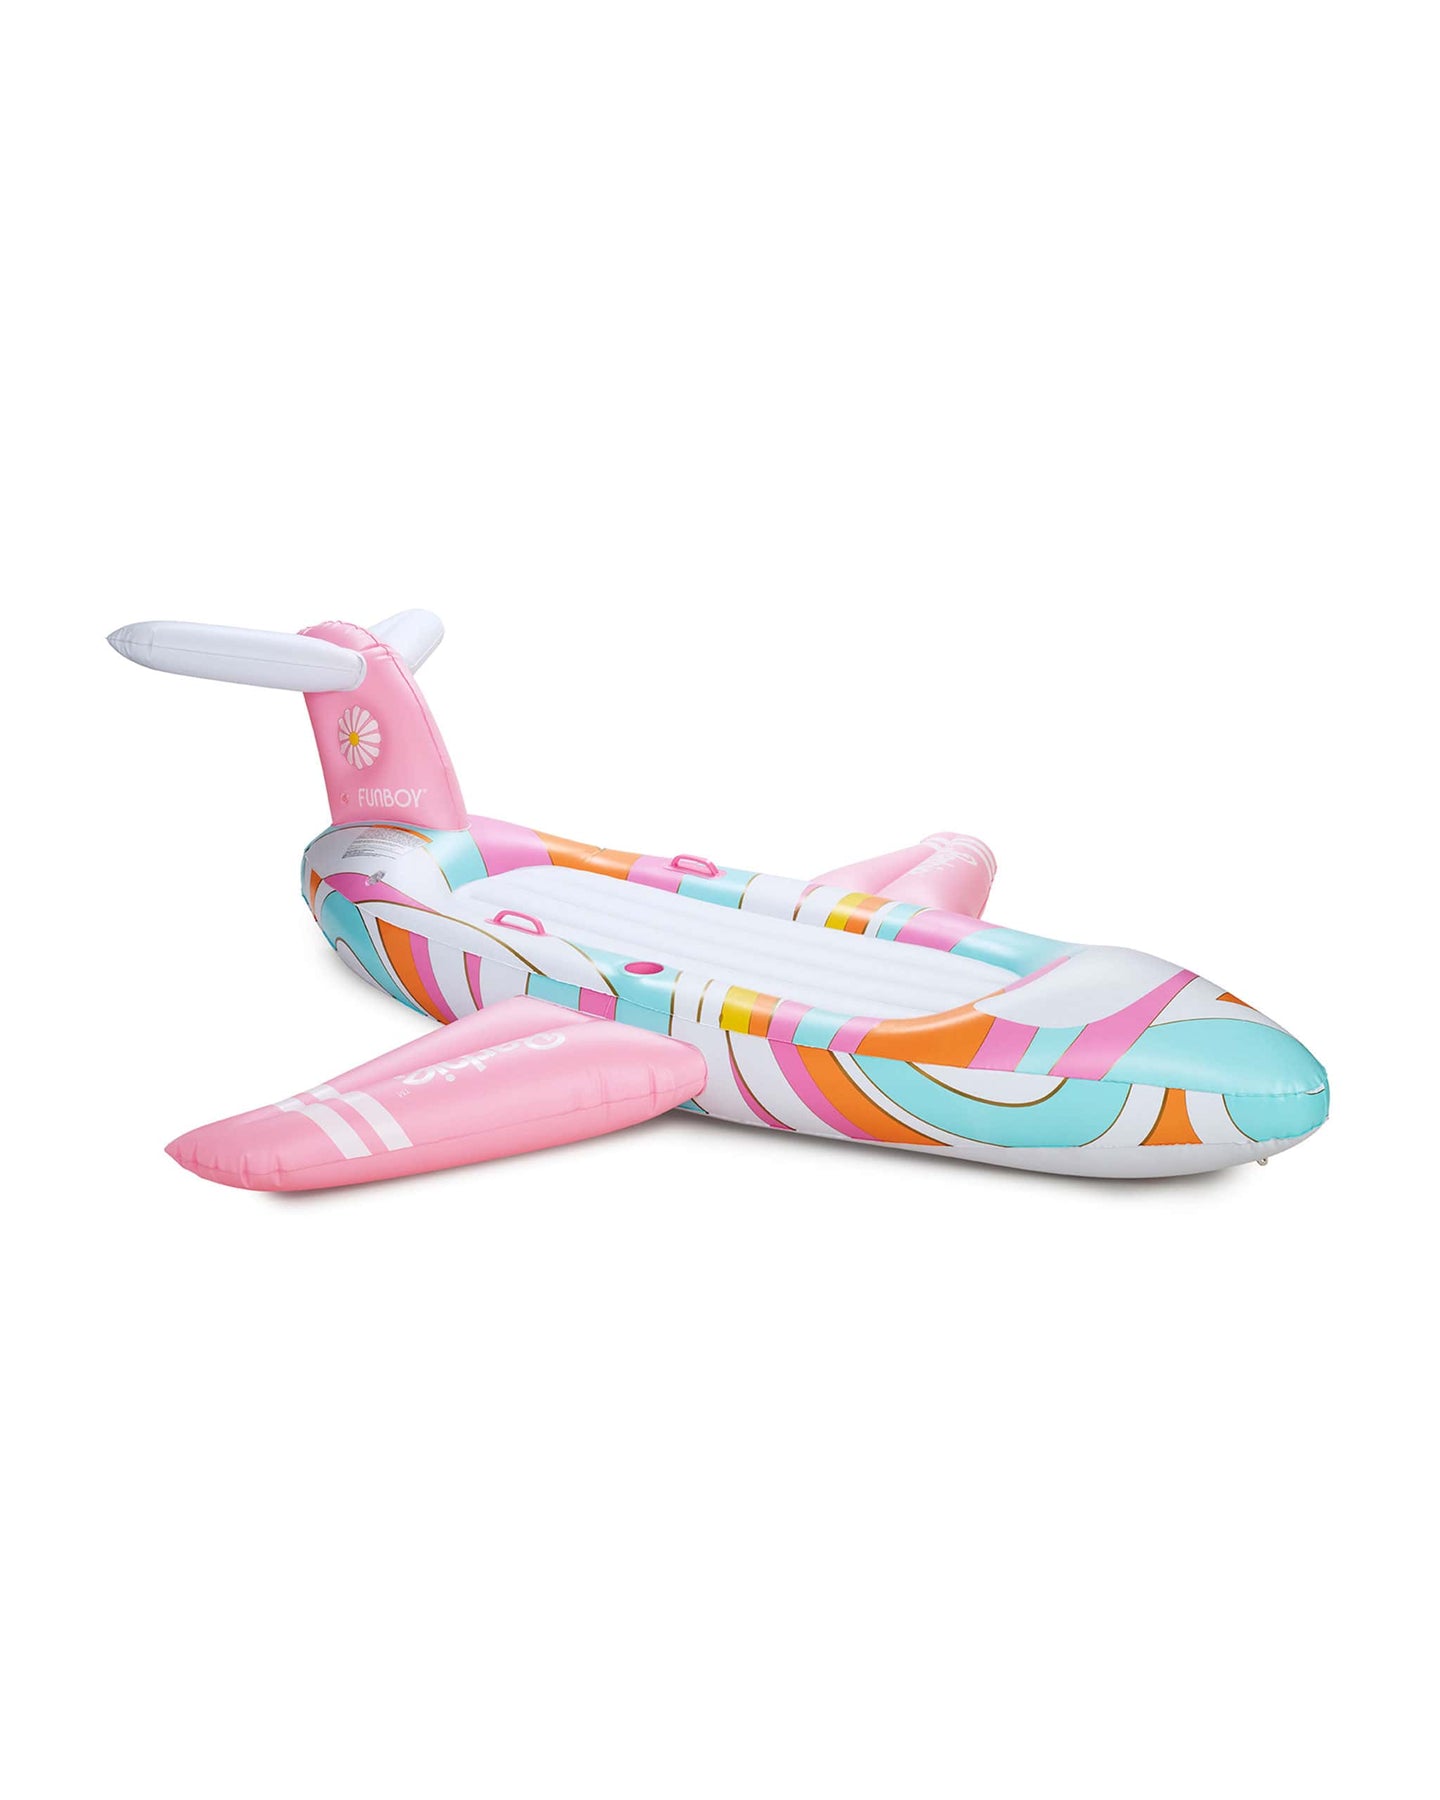 FUNBOY x Malibu Barbie™ Private Jet Plane Pool Float